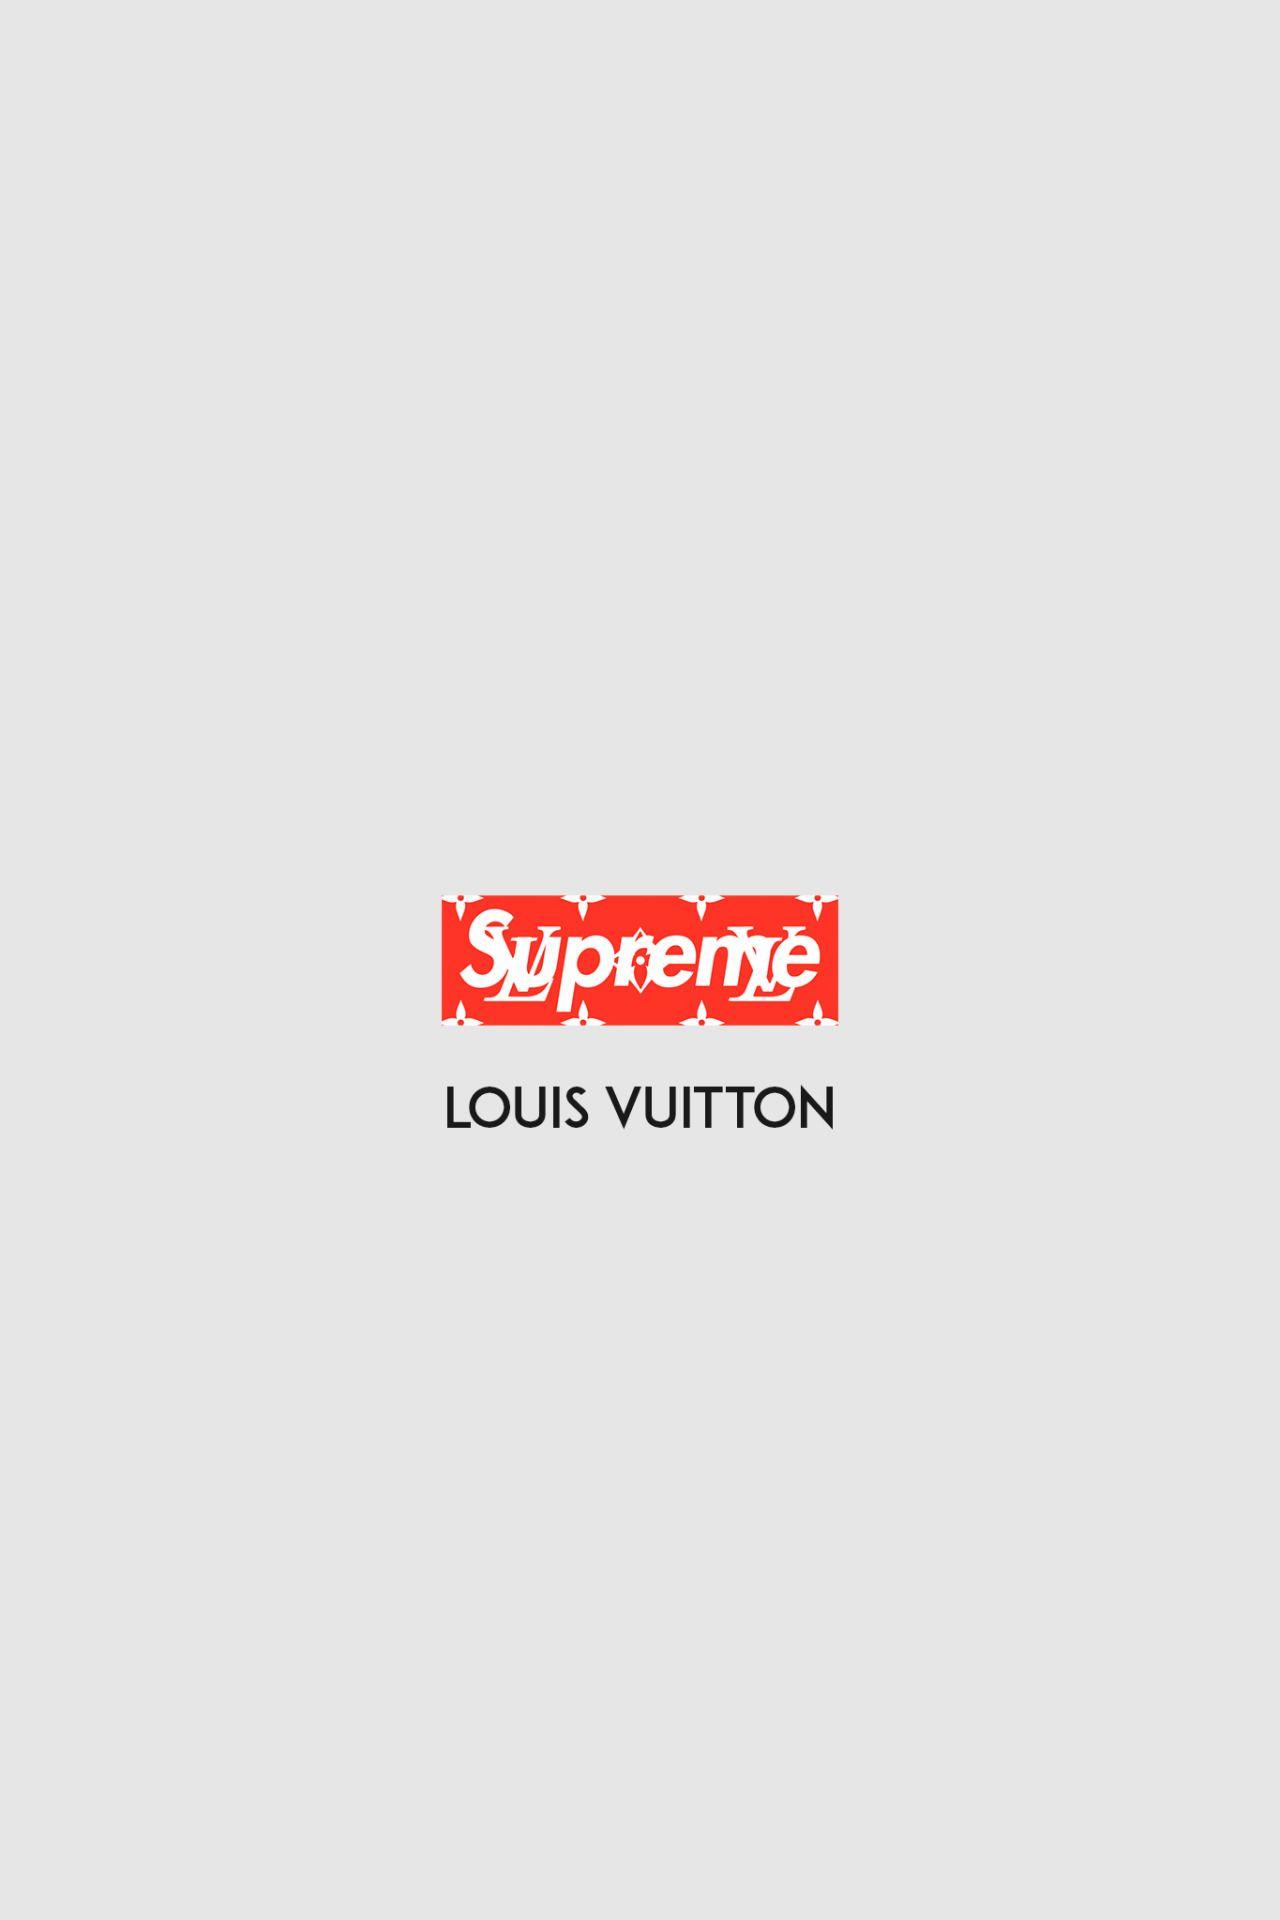 Louis Vuitton Supreme Wallpapers - Wallpaper Cave